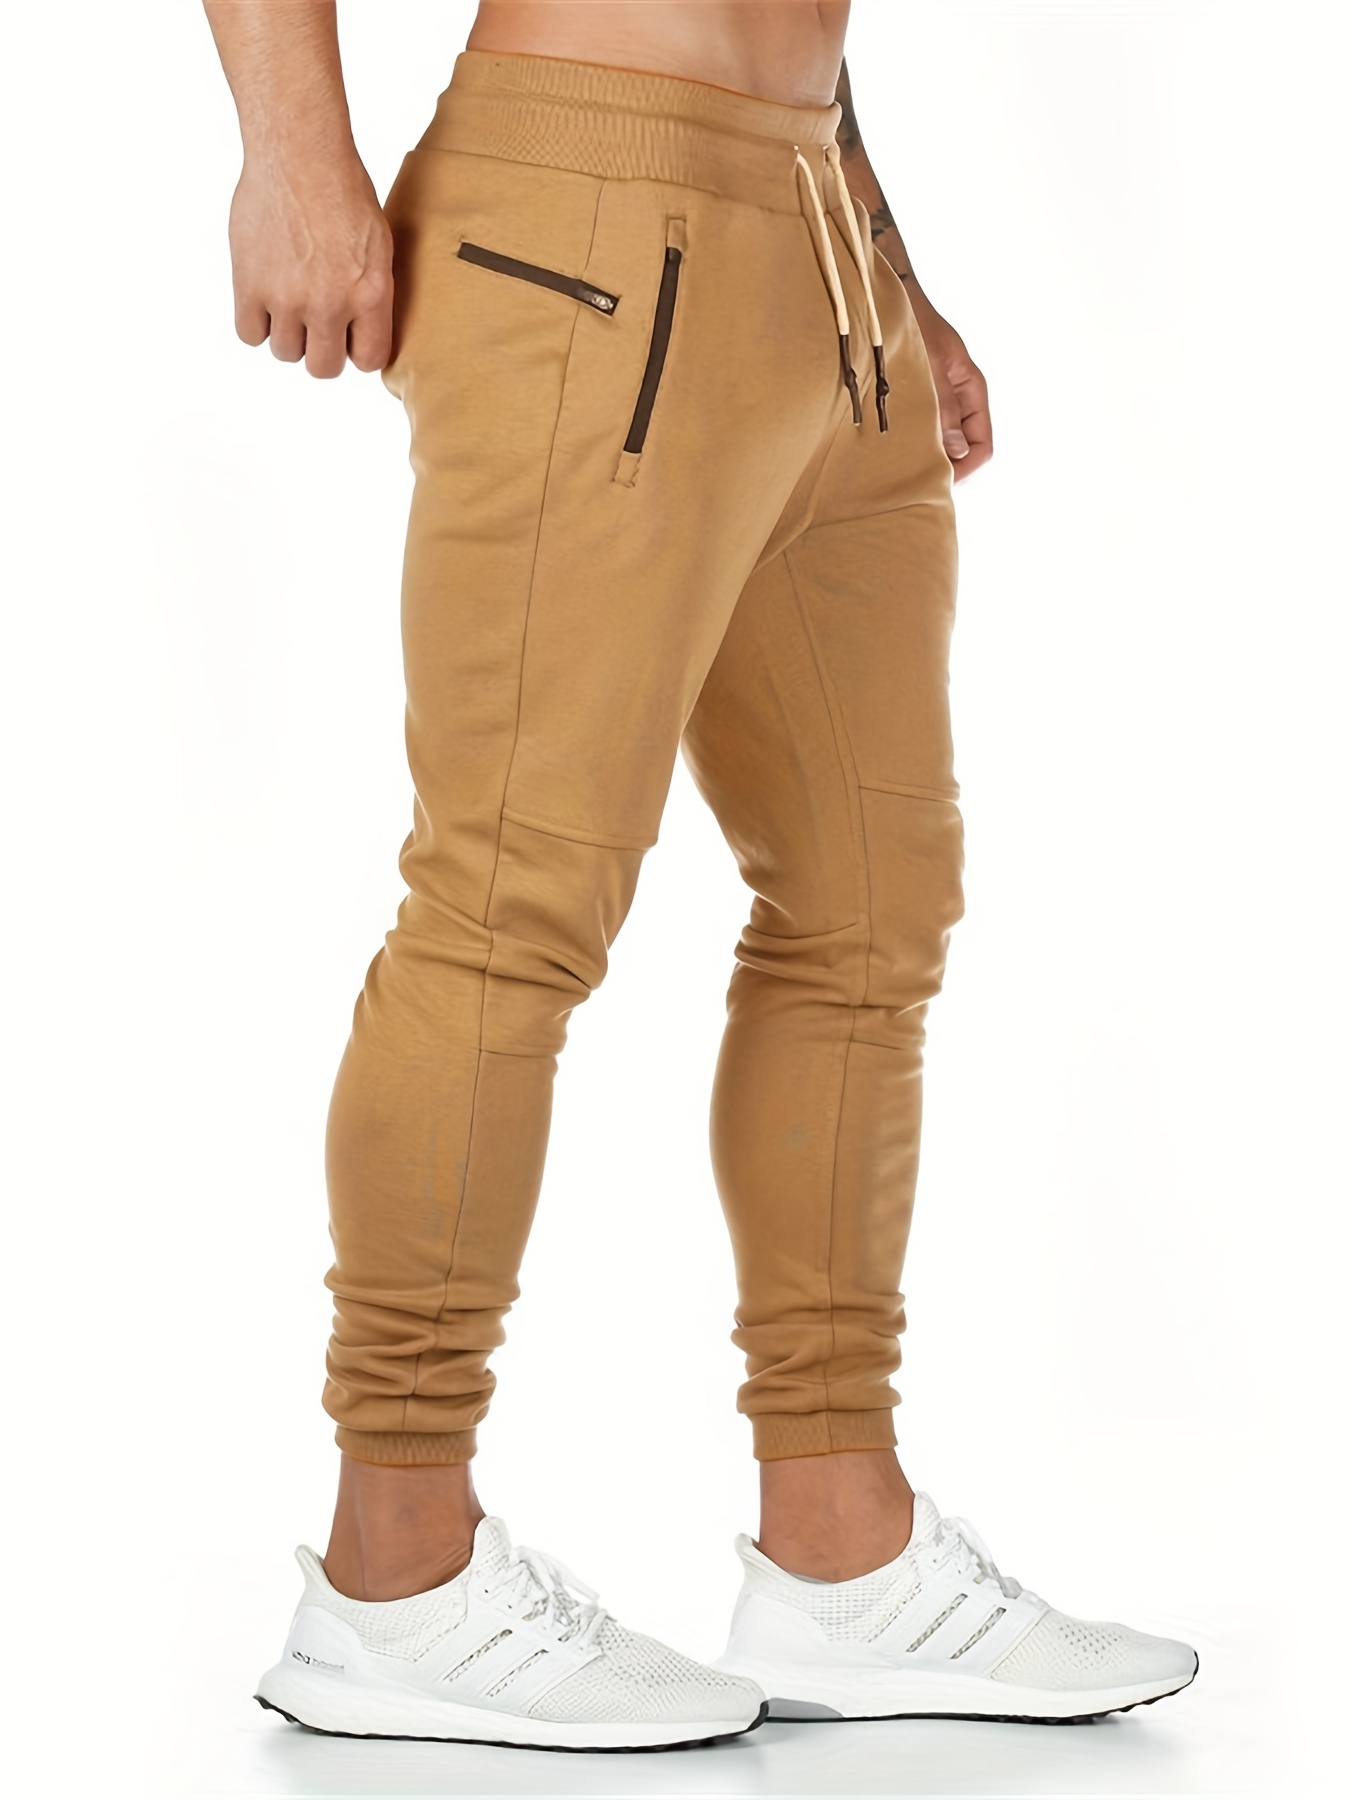 Pantalones Largos Deportivos Para Hombre Ropa De GIMNASIO Chándal De Moda  Casual